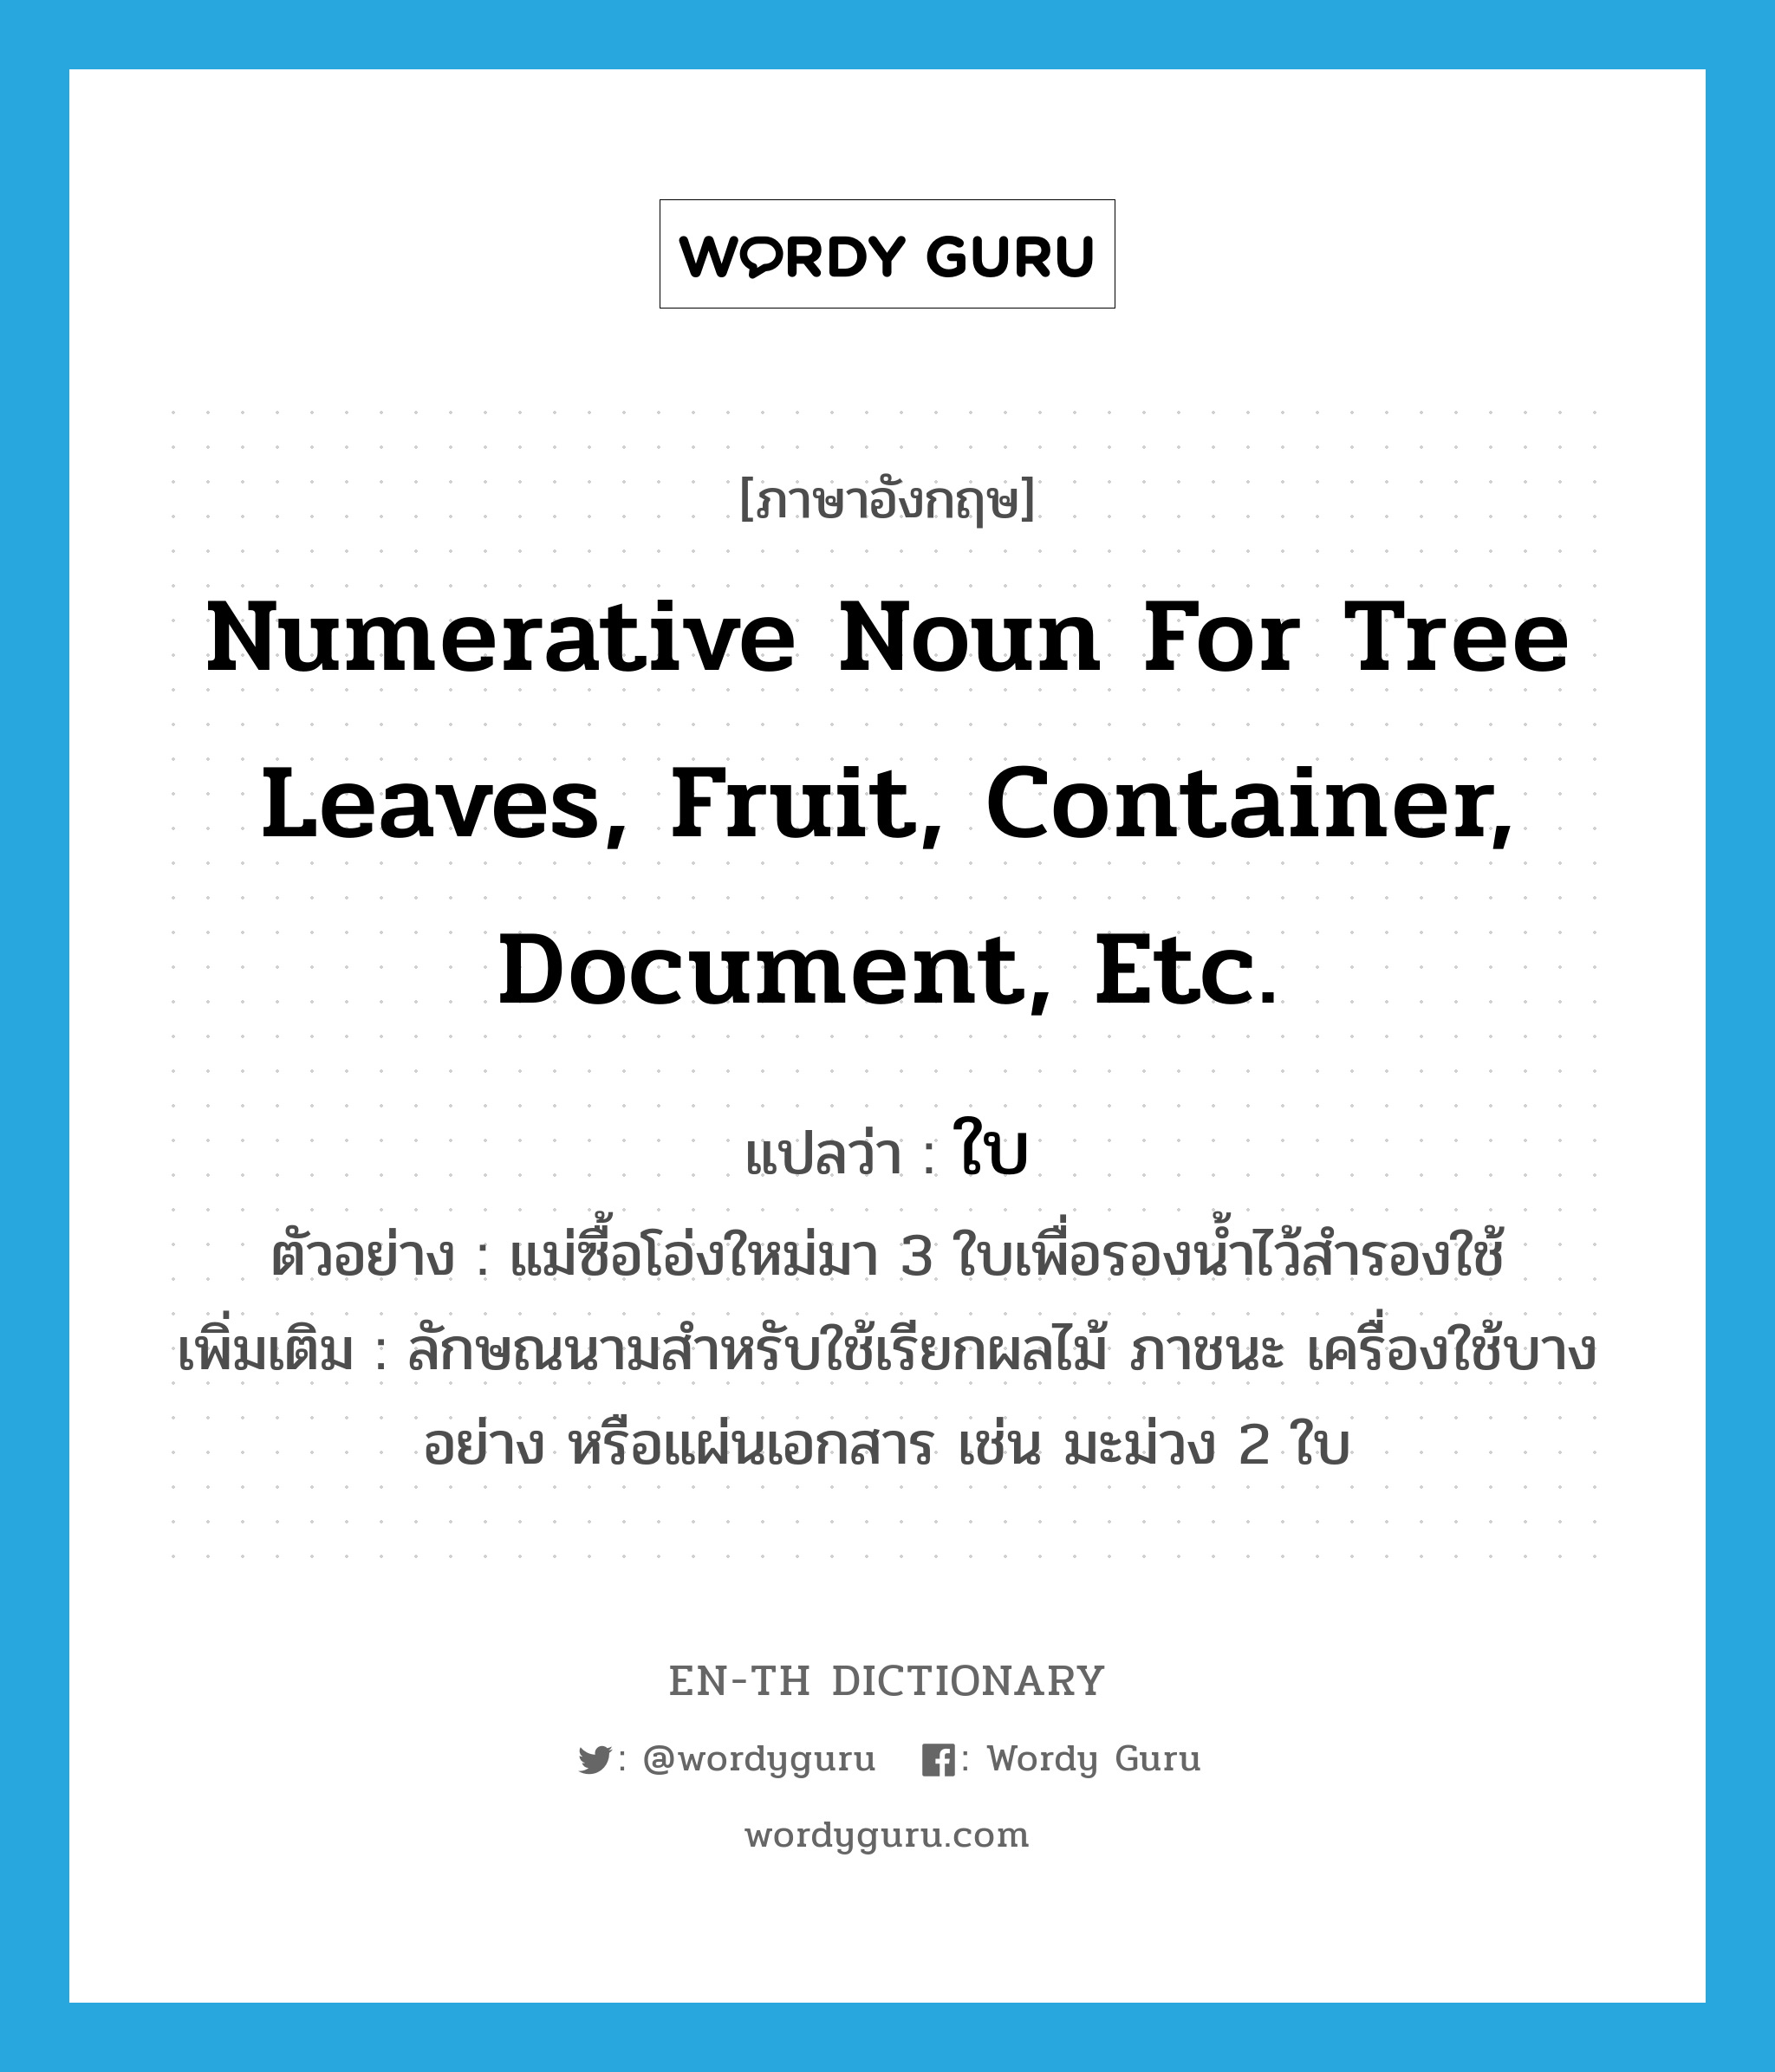 numerative noun for tree leaves, fruit, container, document, etc. แปลว่า? คำศัพท์ในกลุ่มประเภท CLAS, คำศัพท์ภาษาอังกฤษ numerative noun for tree leaves, fruit, container, document, etc. แปลว่า ใบ ประเภท CLAS ตัวอย่าง แม่ซื้อโอ่งใหม่มา 3 ใบเพื่อรองน้ำไว้สำรองใช้ เพิ่มเติม ลักษณนามสำหรับใช้เรียกผลไม้ ภาชนะ เครื่องใช้บางอย่าง หรือแผ่นเอกสาร เช่น มะม่วง 2 ใบ หมวด CLAS